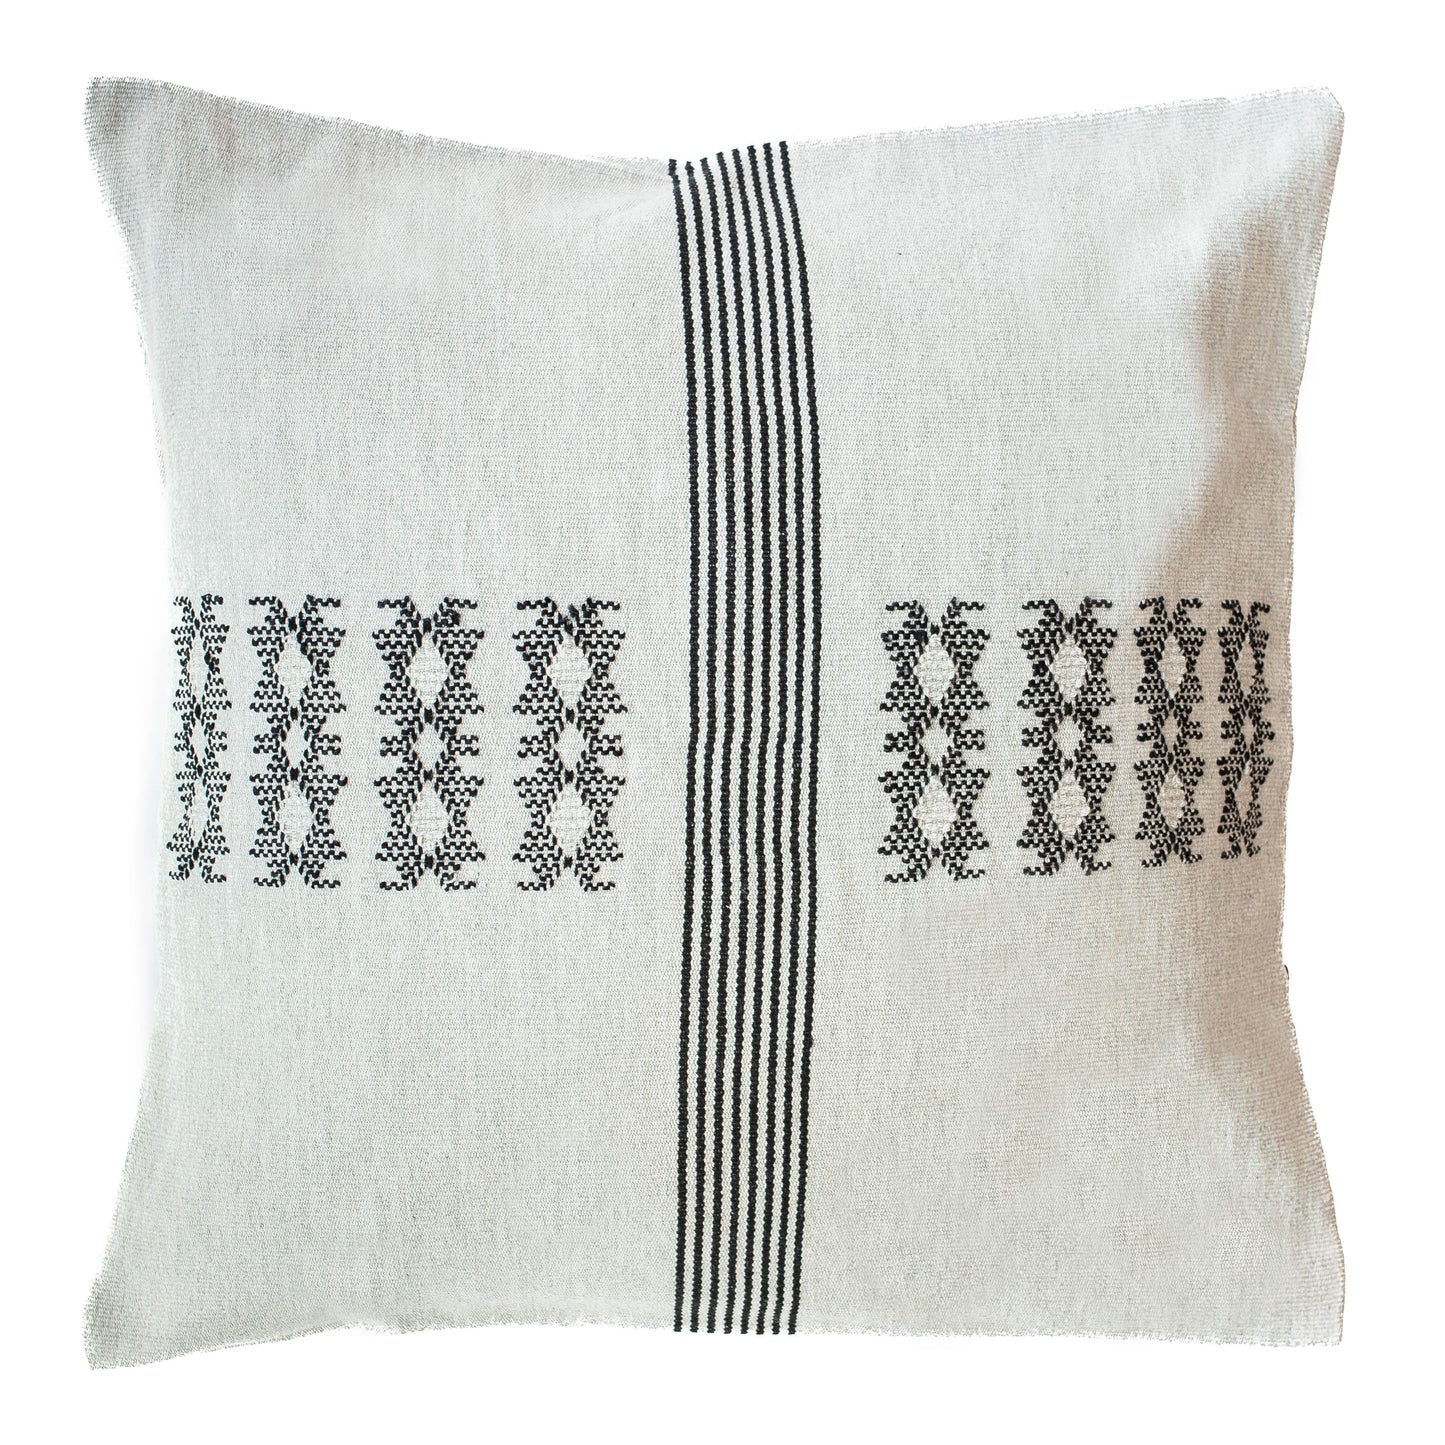 Tusutya Handwoven Decorative Pillow